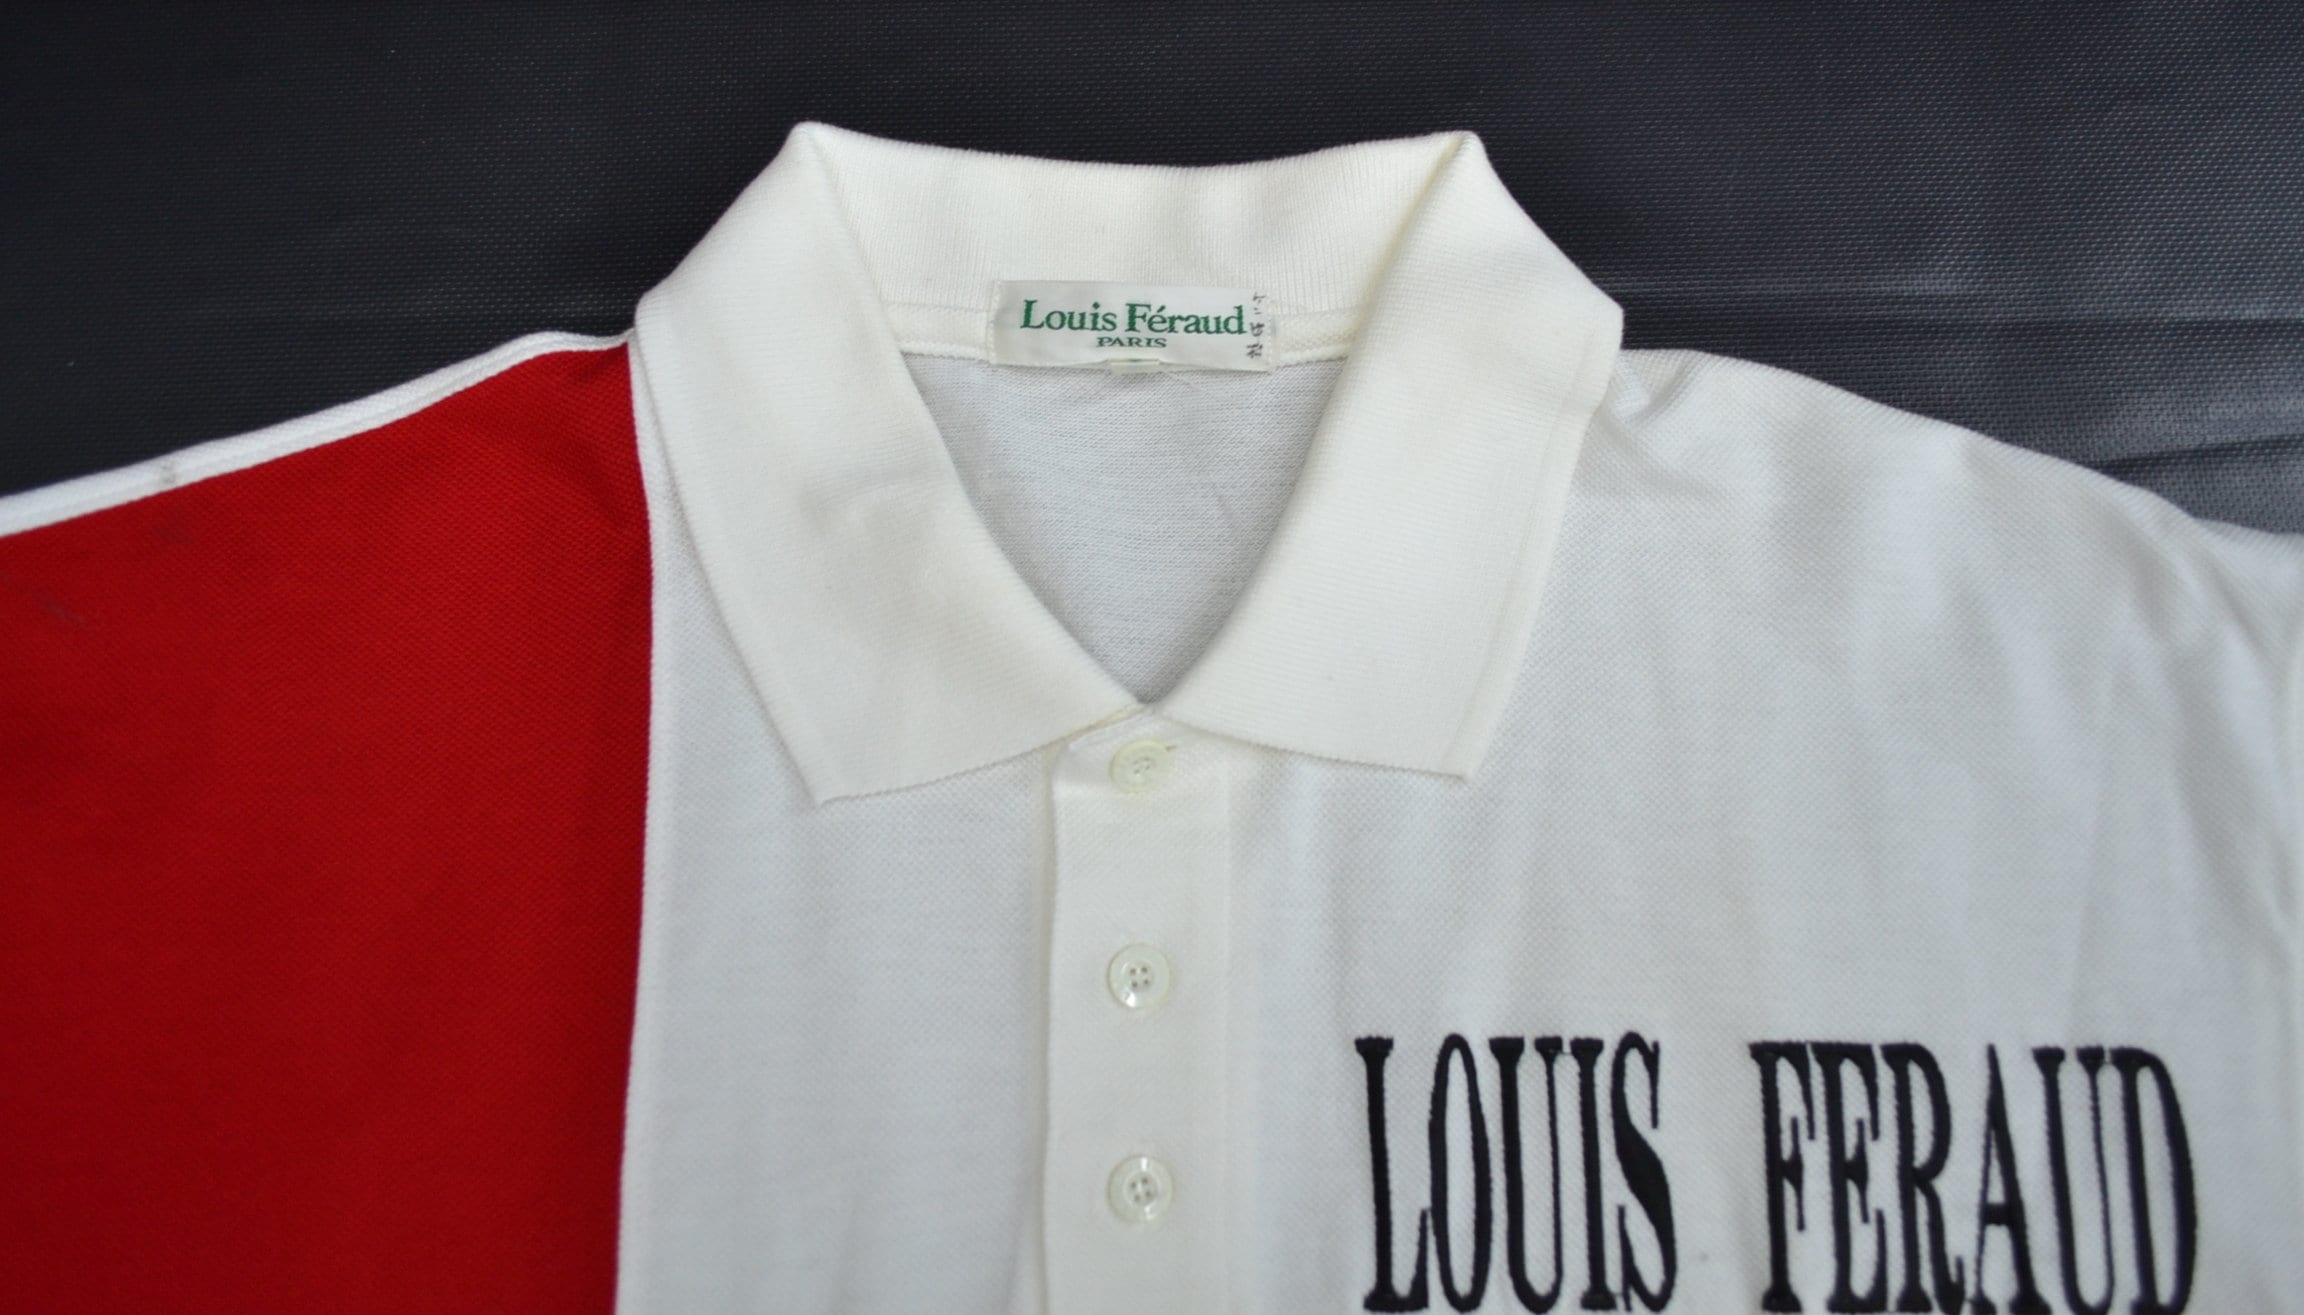 Louis Féraud Shirt Vintage Louis Féraud Polo Shirt 90s Louis